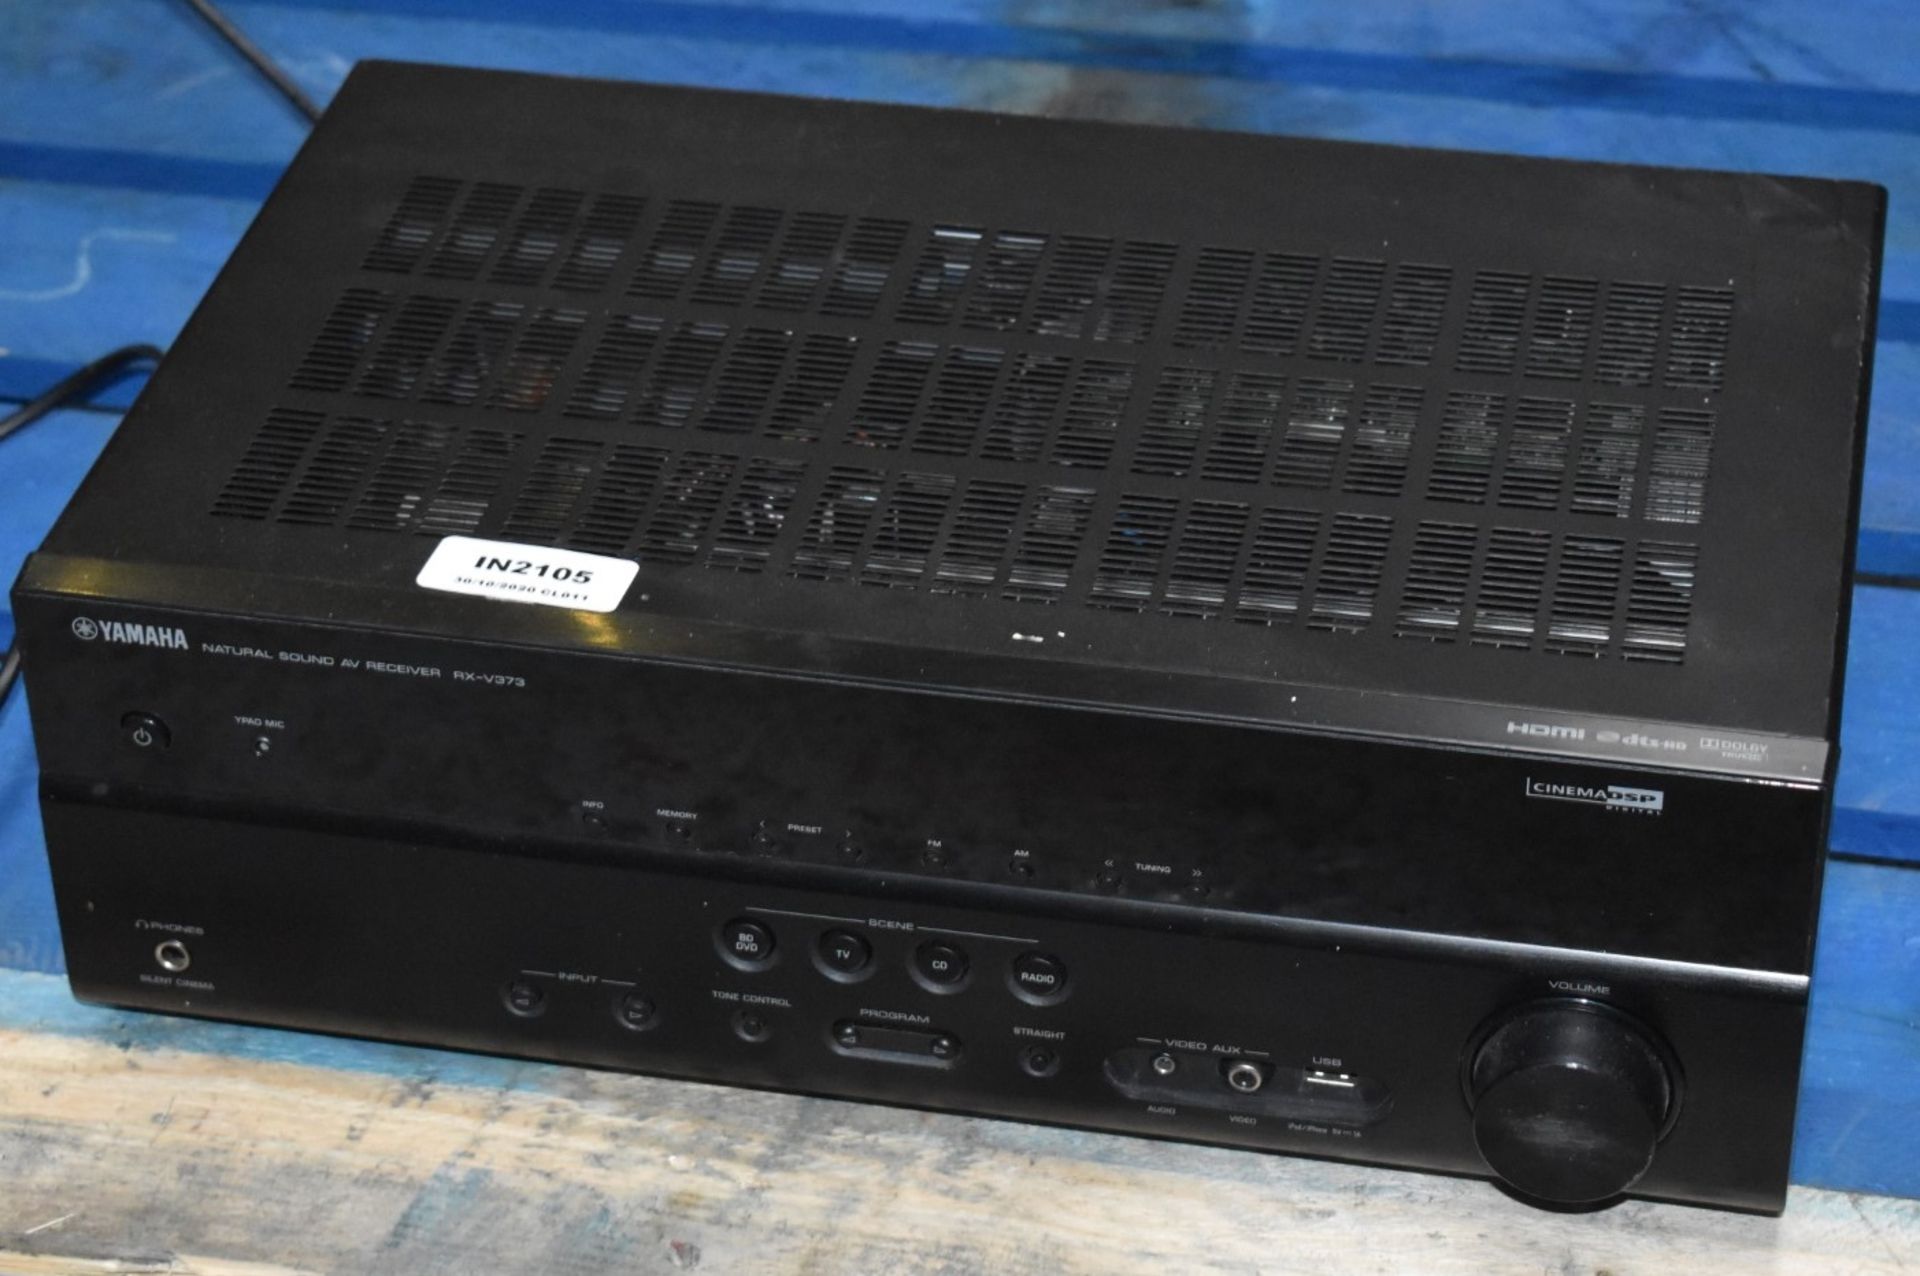 1 x Yamaha RX-V373 Natural Sound AV Receiver - DSP Cinema Amp - Ref: In2105 Pal1 WH1 - CL546 - - Image 2 of 6